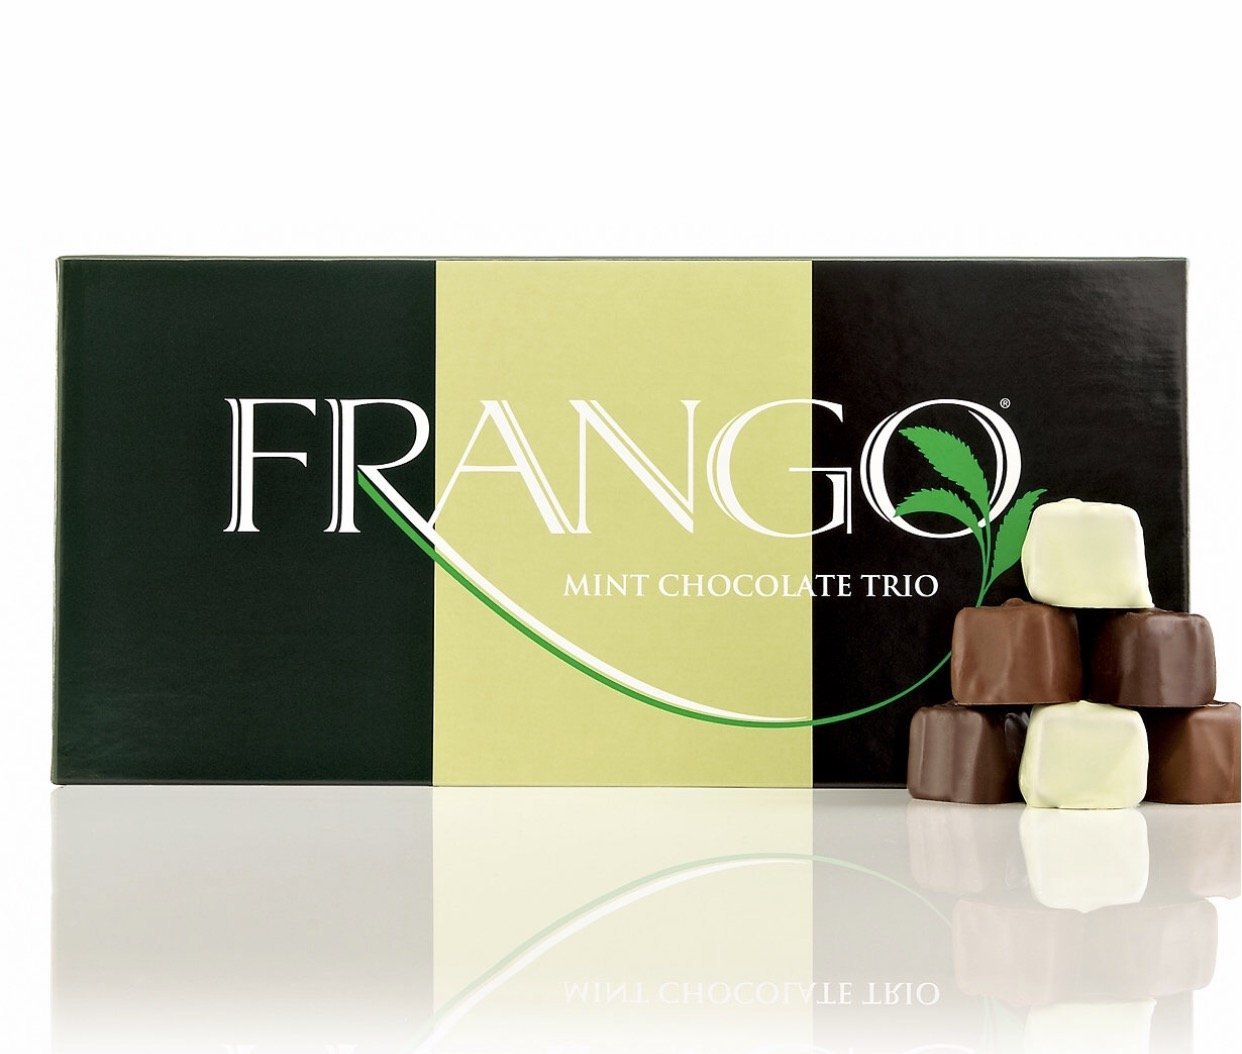 Frango Mint Chocolate Trio - 1 Lb.